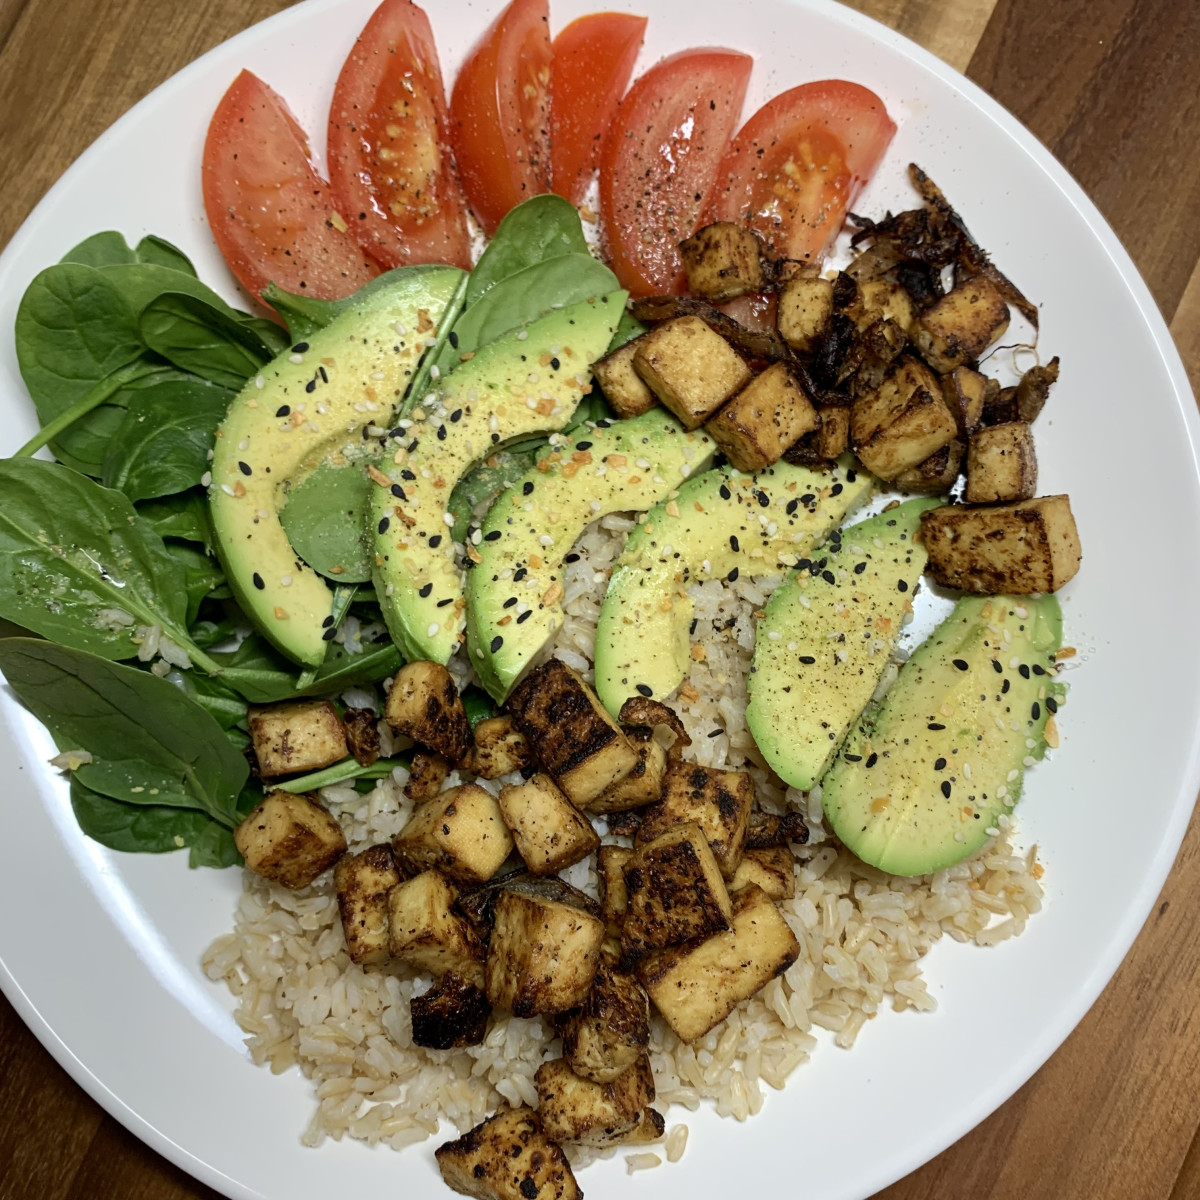 Enjoy crispy tofu with assorted veggies and brown rice